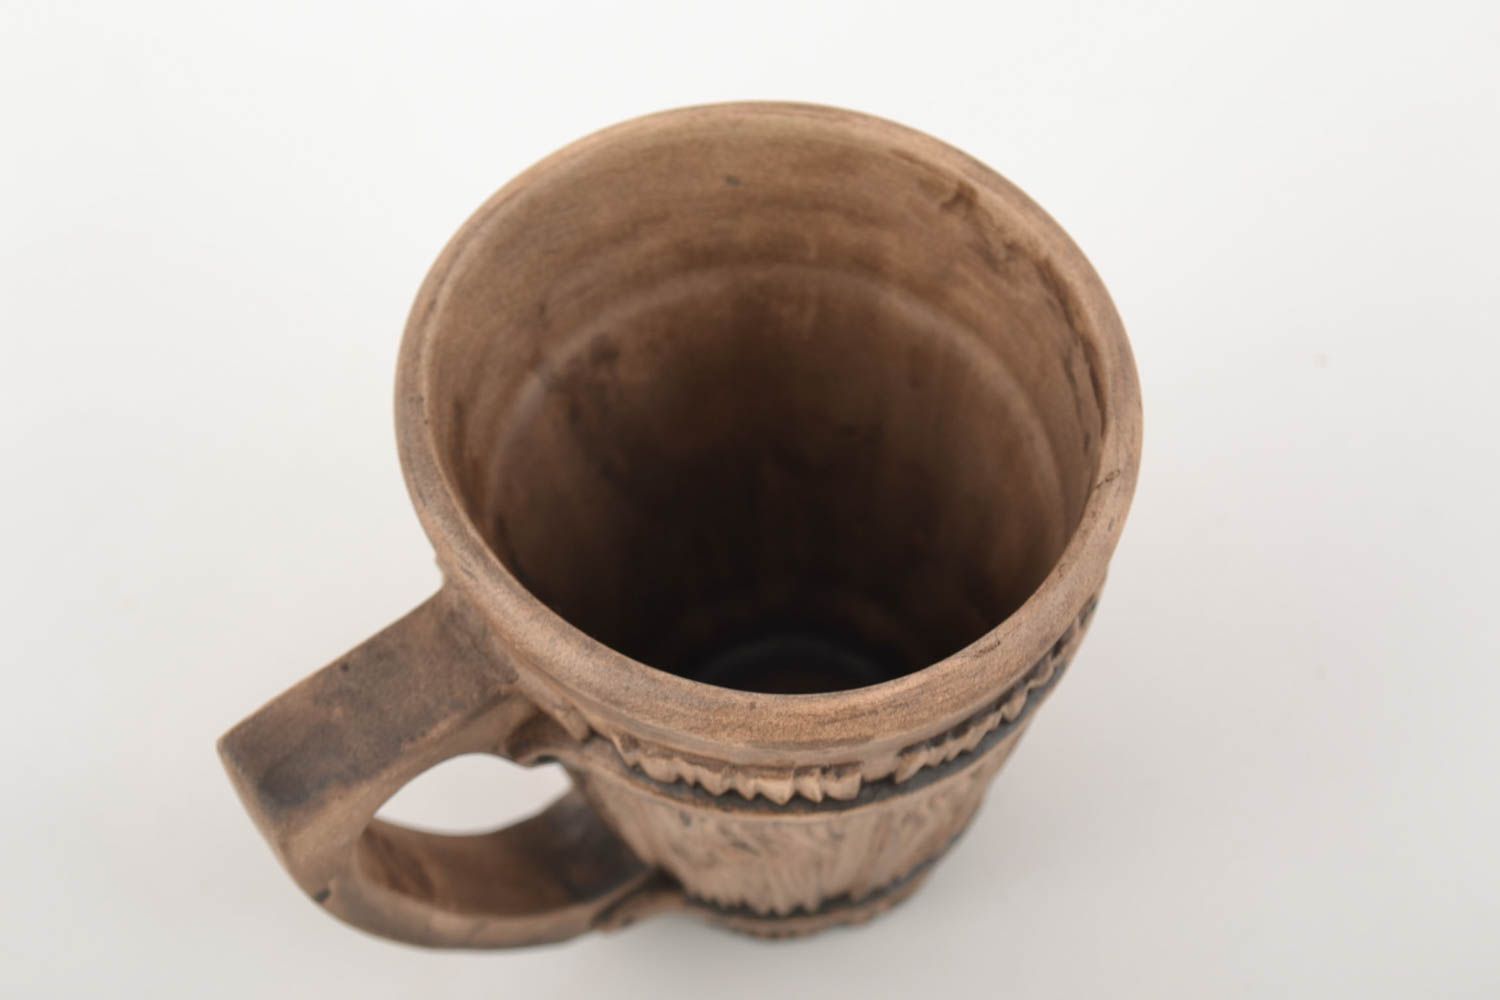 11 oz clay tea mug with handle in fake wood style 0,75 lb photo 2